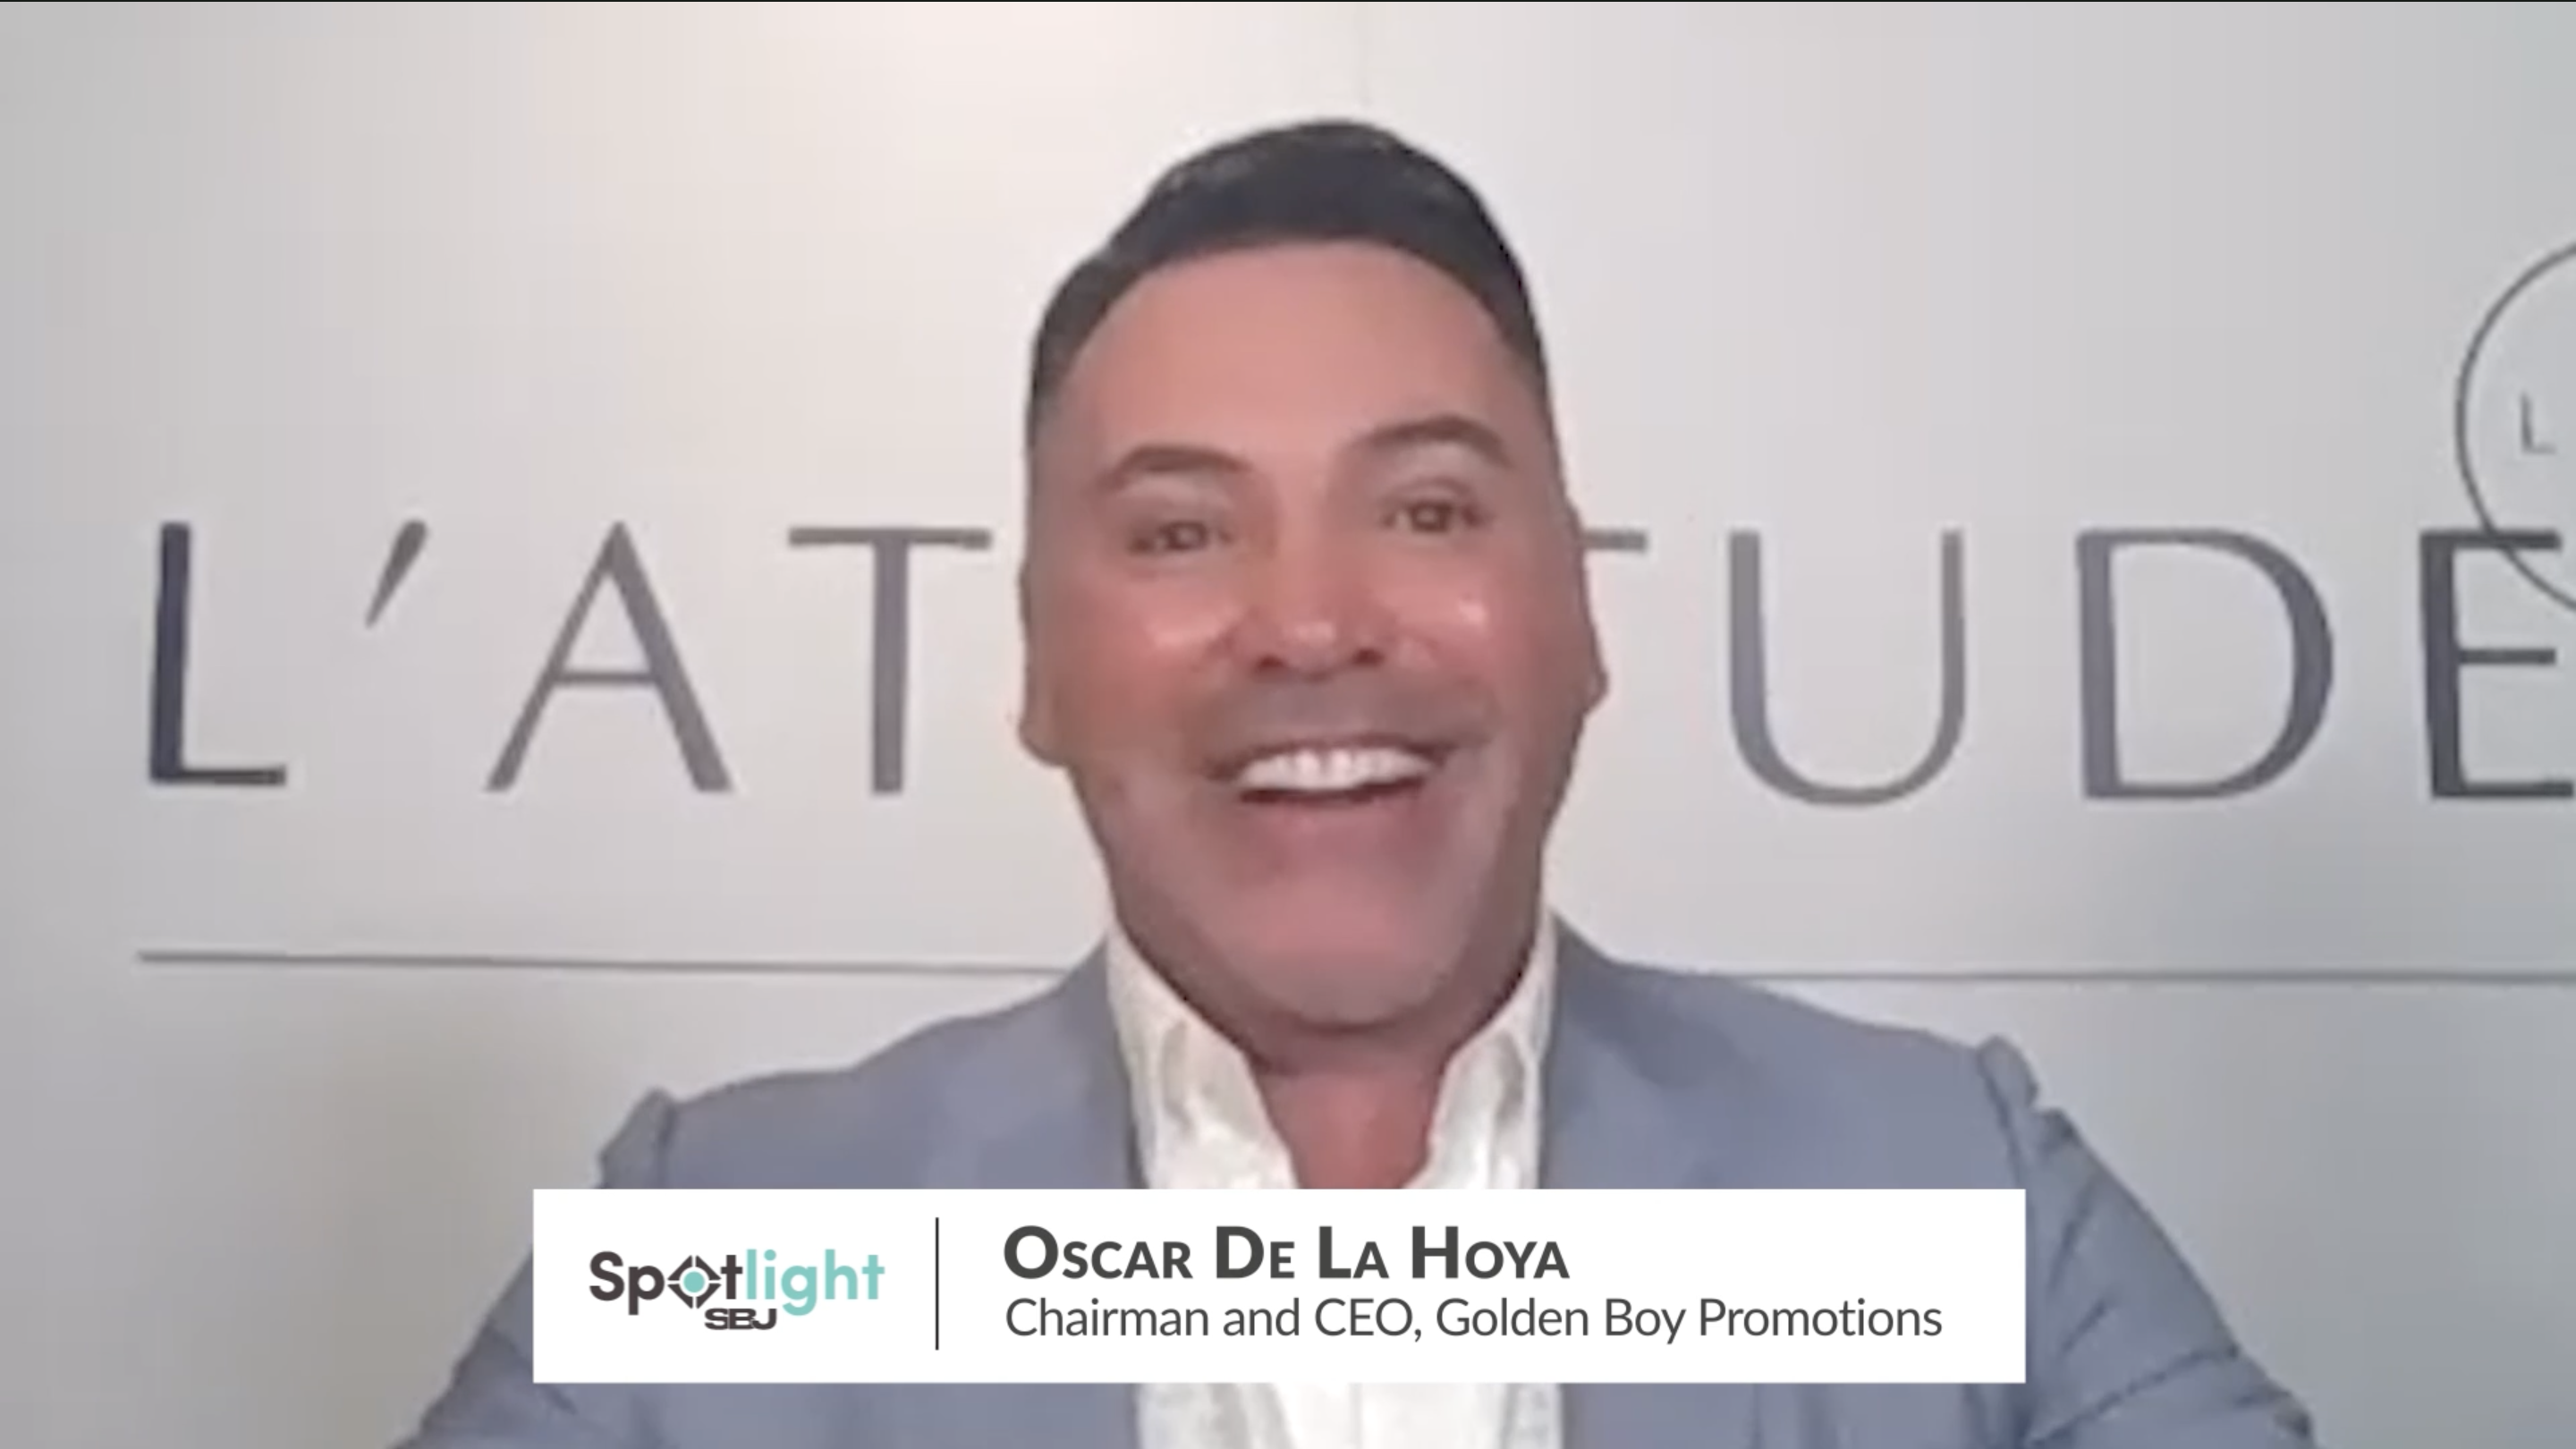 Spotlight: De La Hoya on reaching the Latino market